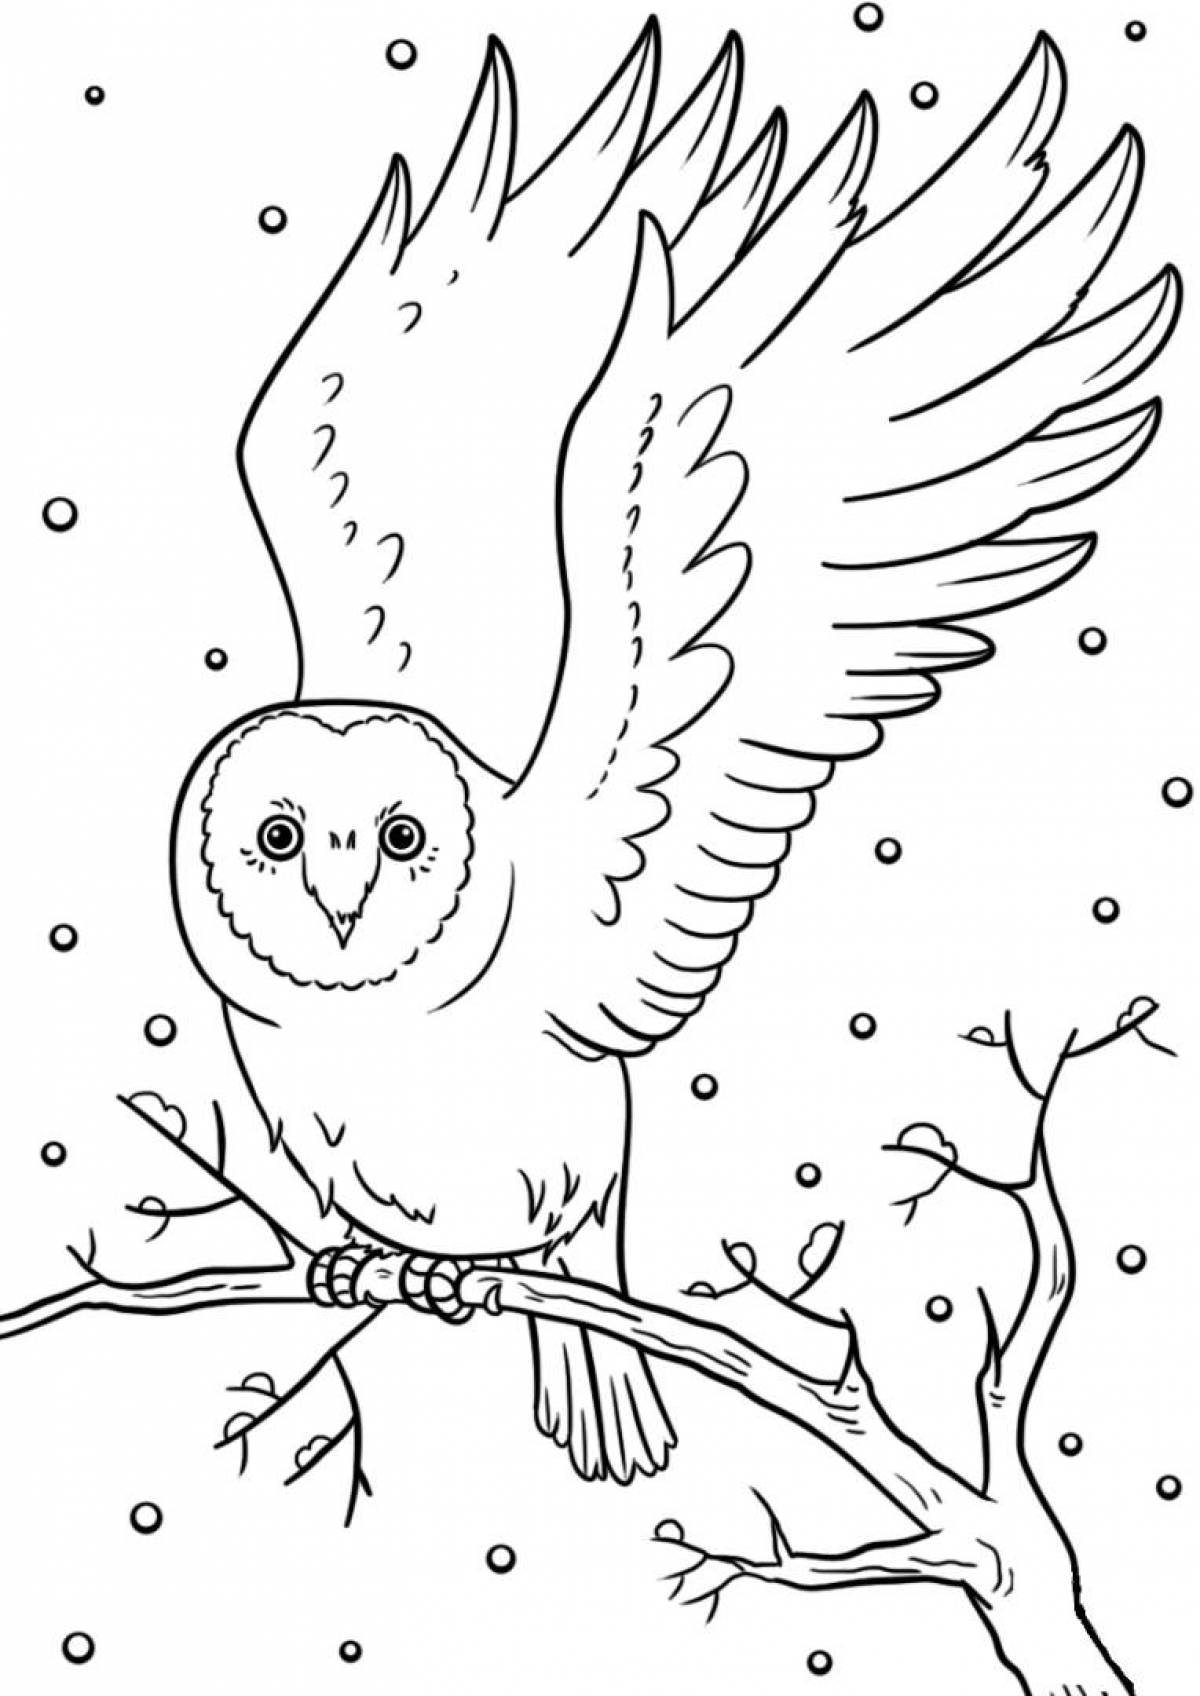 Cute winter birds coloring page for preschoolers